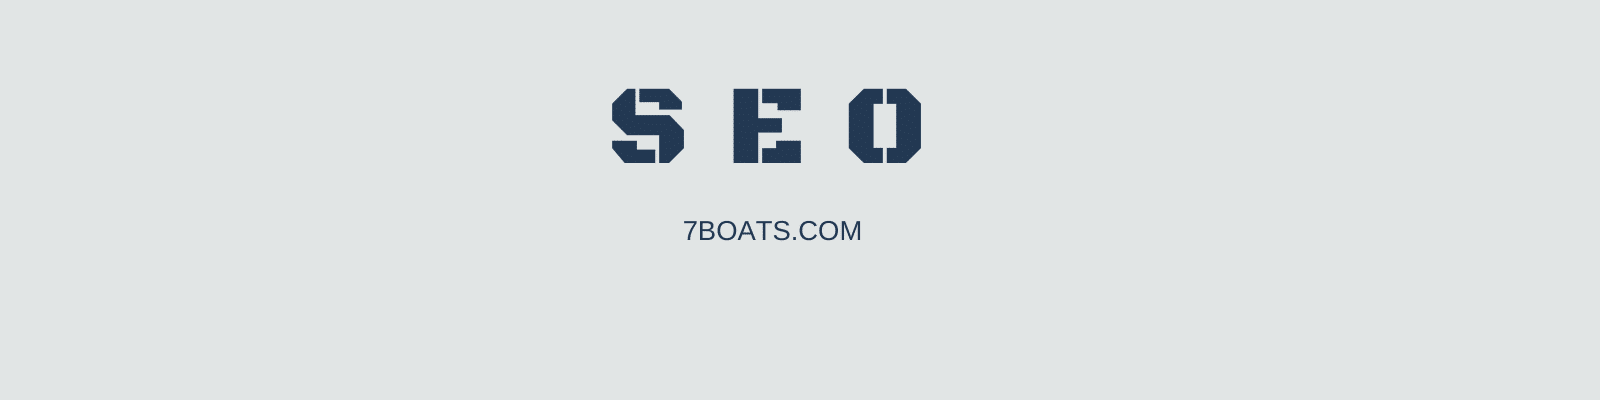 SEO Services in Kolkata India by 7boats